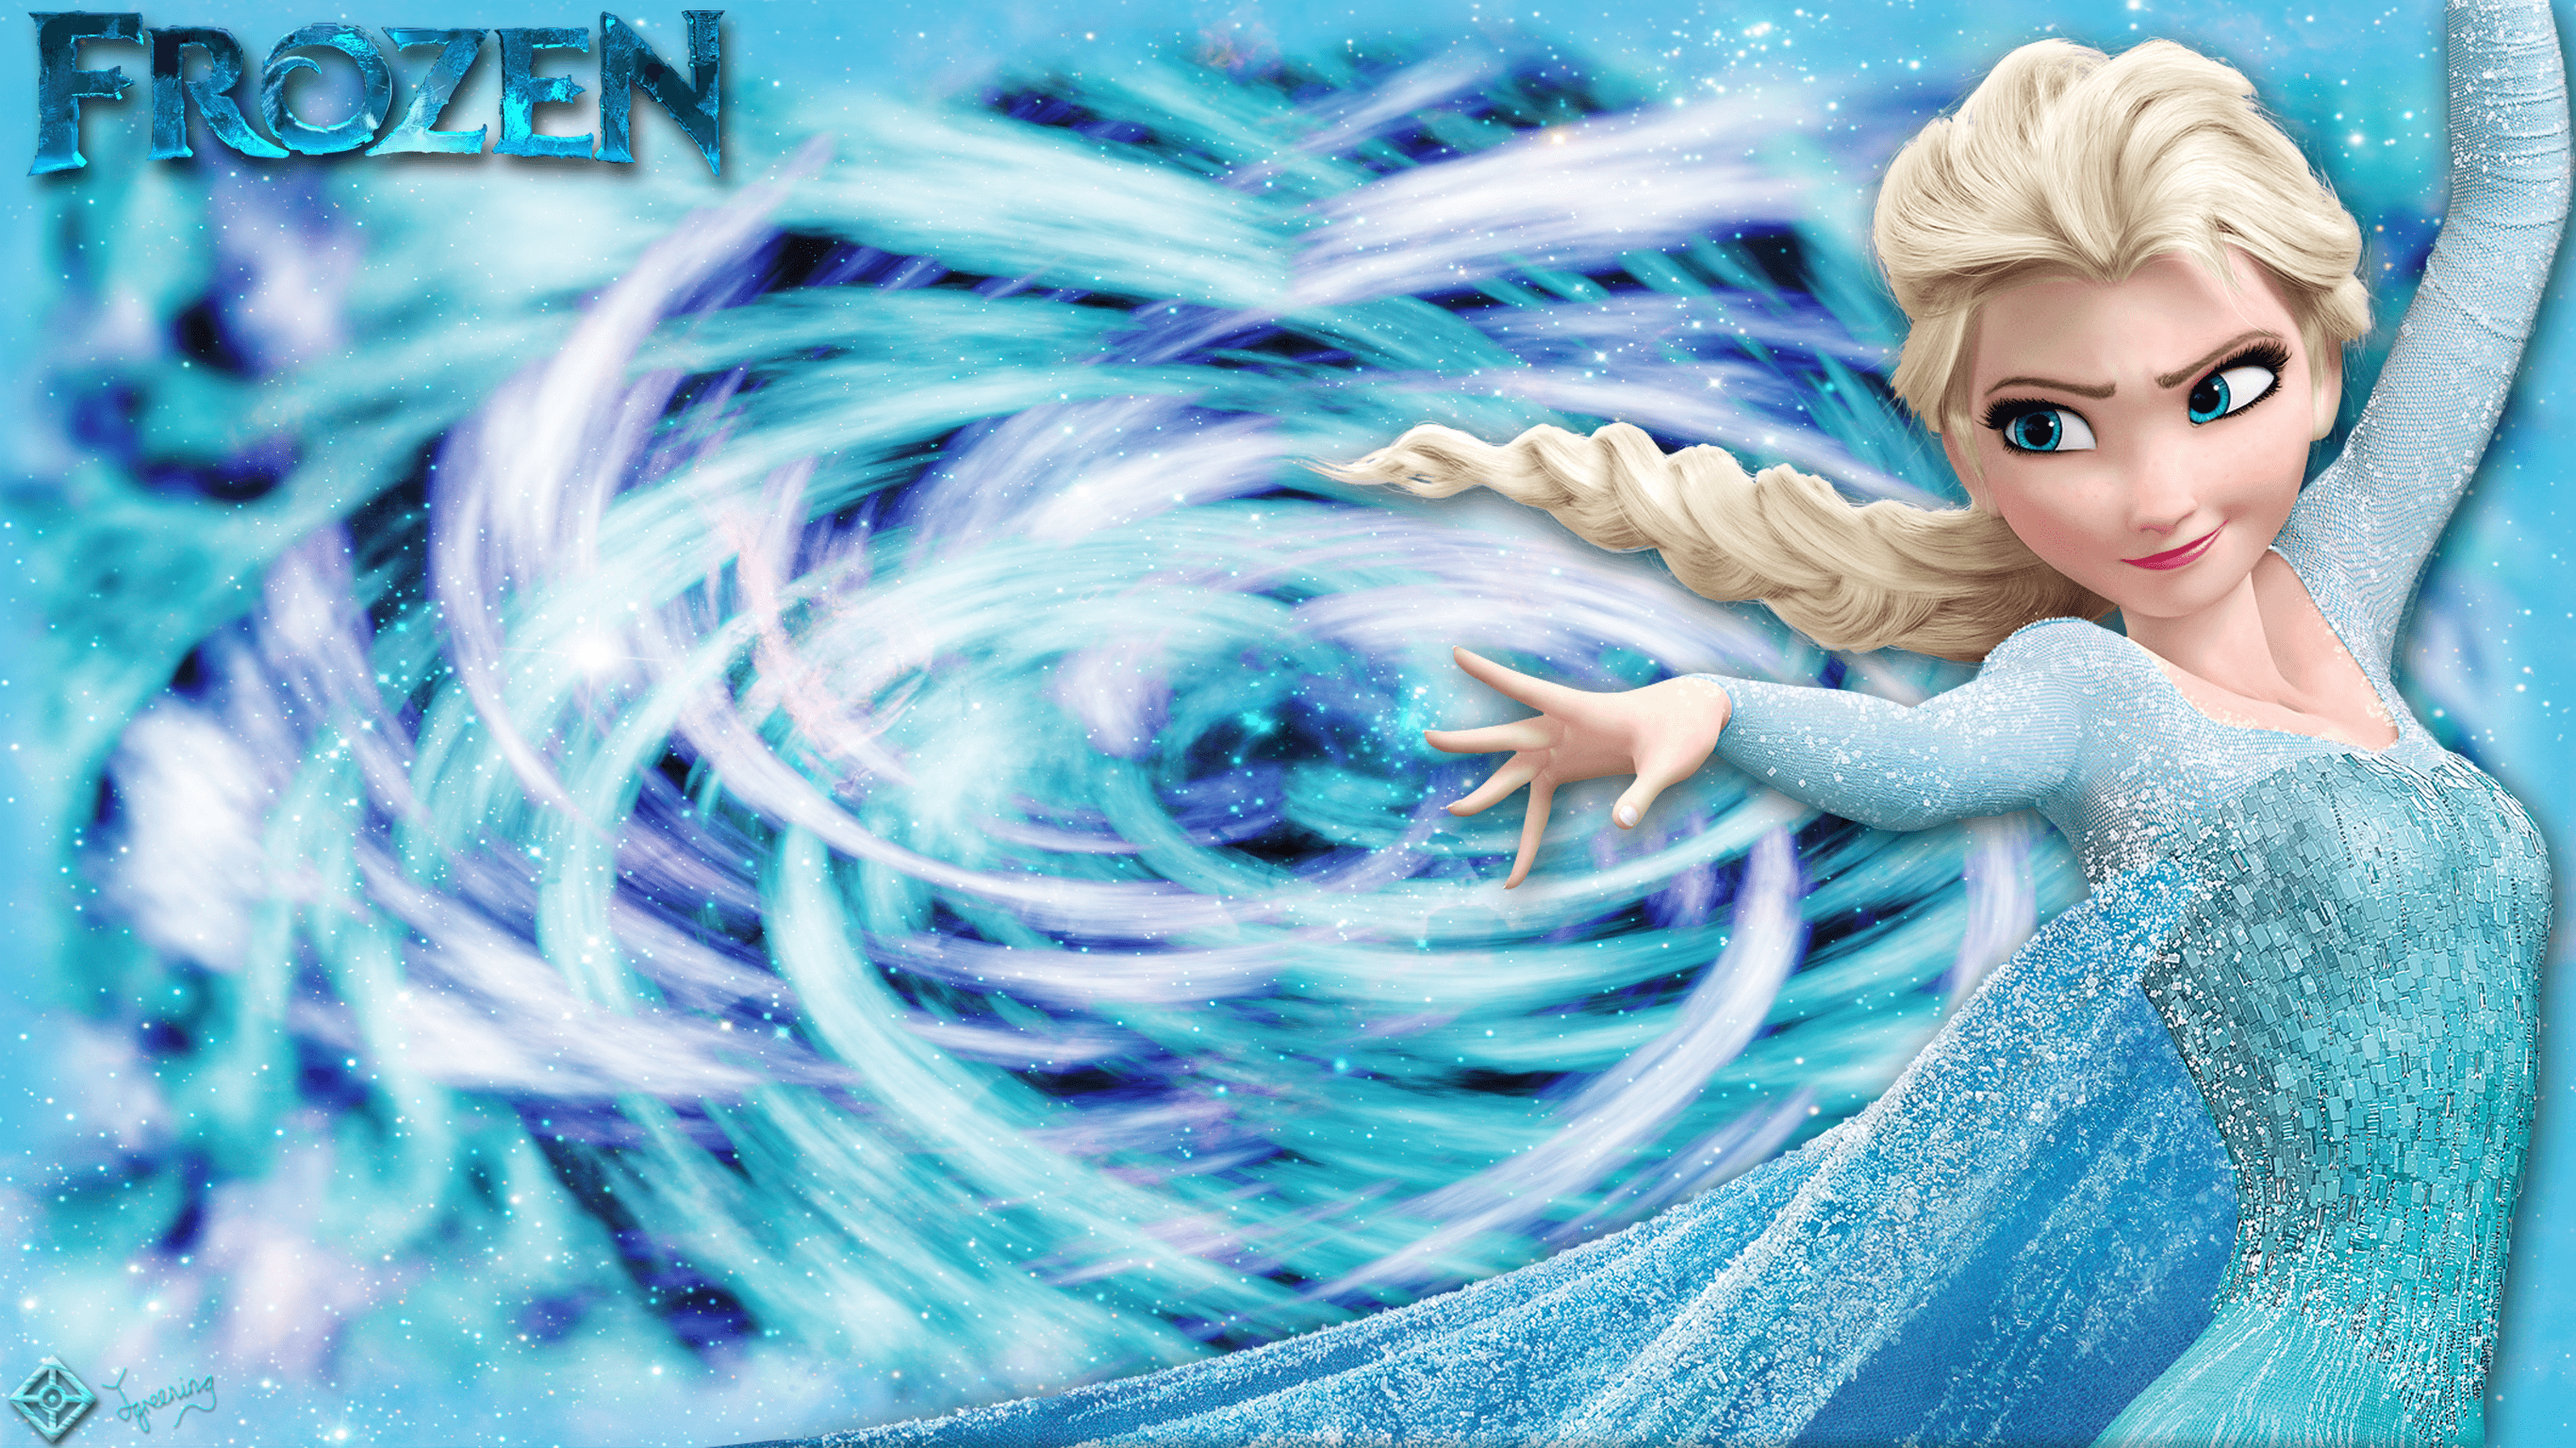 Elsa Frozen Wallpaper HD. Wallpaper, Background, Image, Art